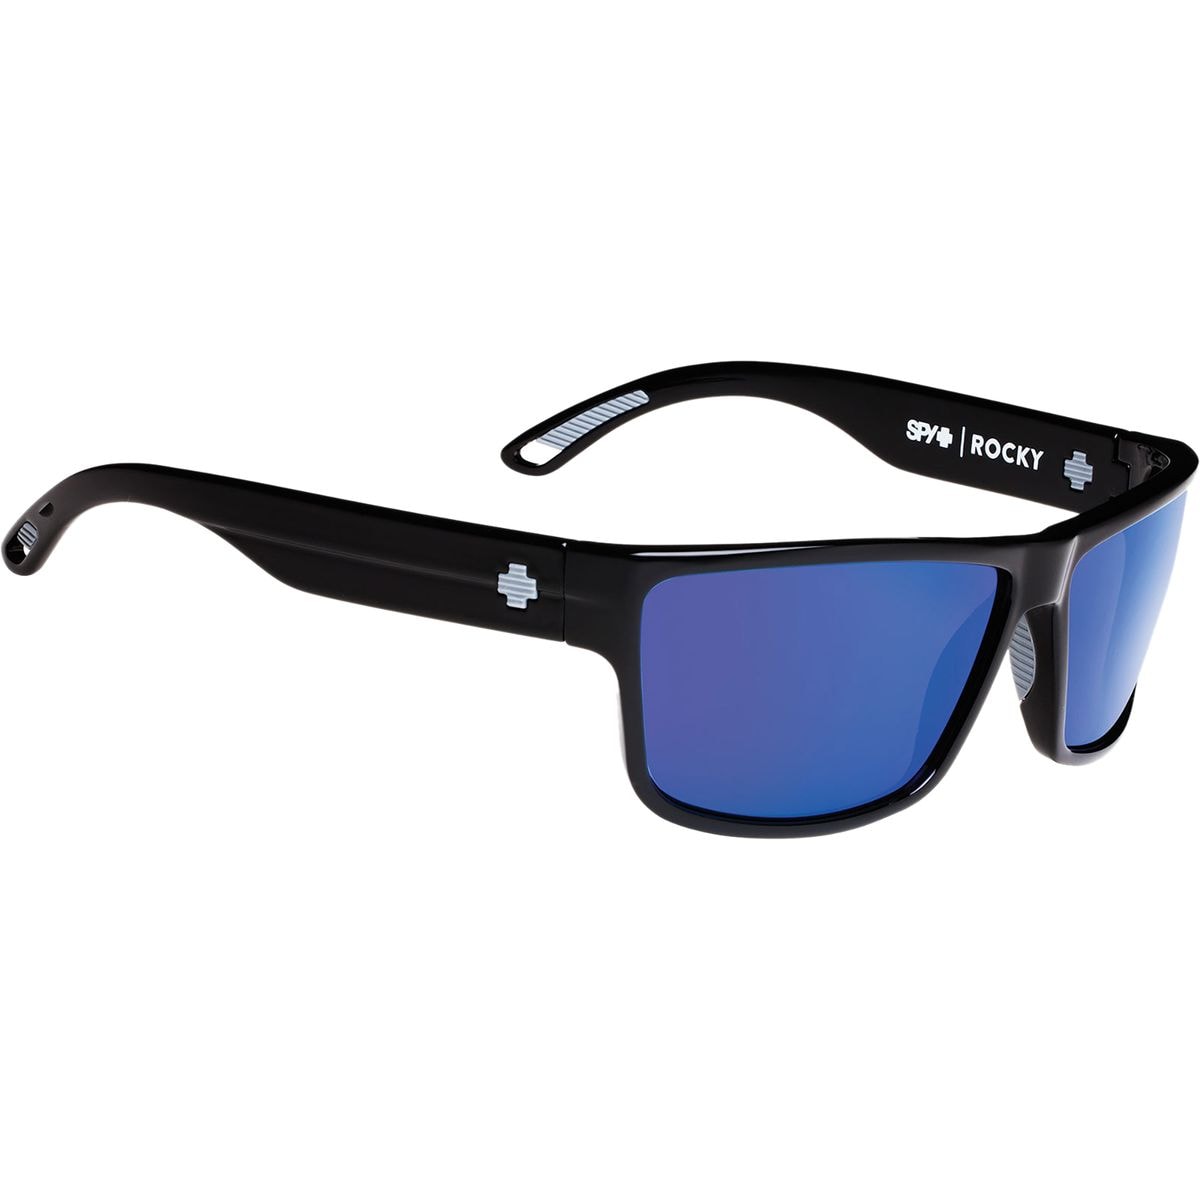 Spy Rocky Polarized Sunglasses - Men's